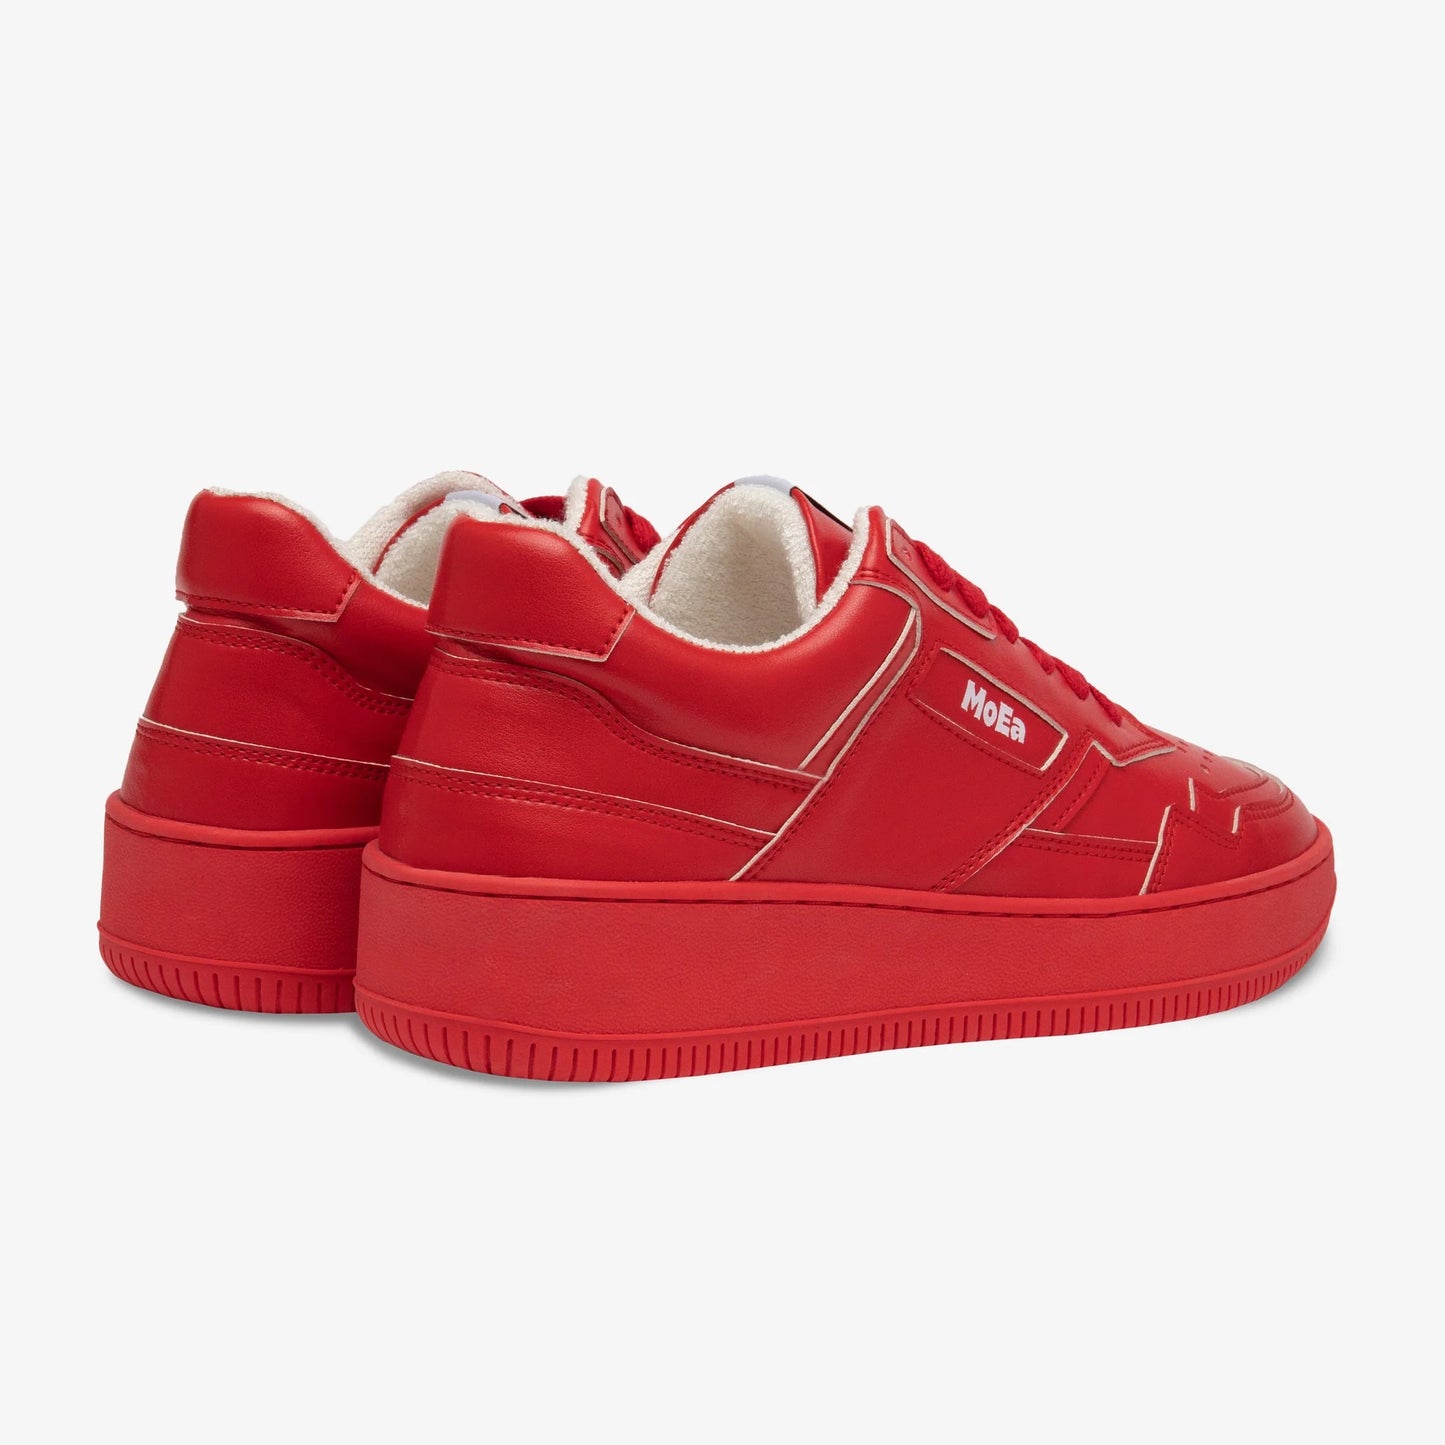 MoEa Gen1 Apple Full Red Sneakers